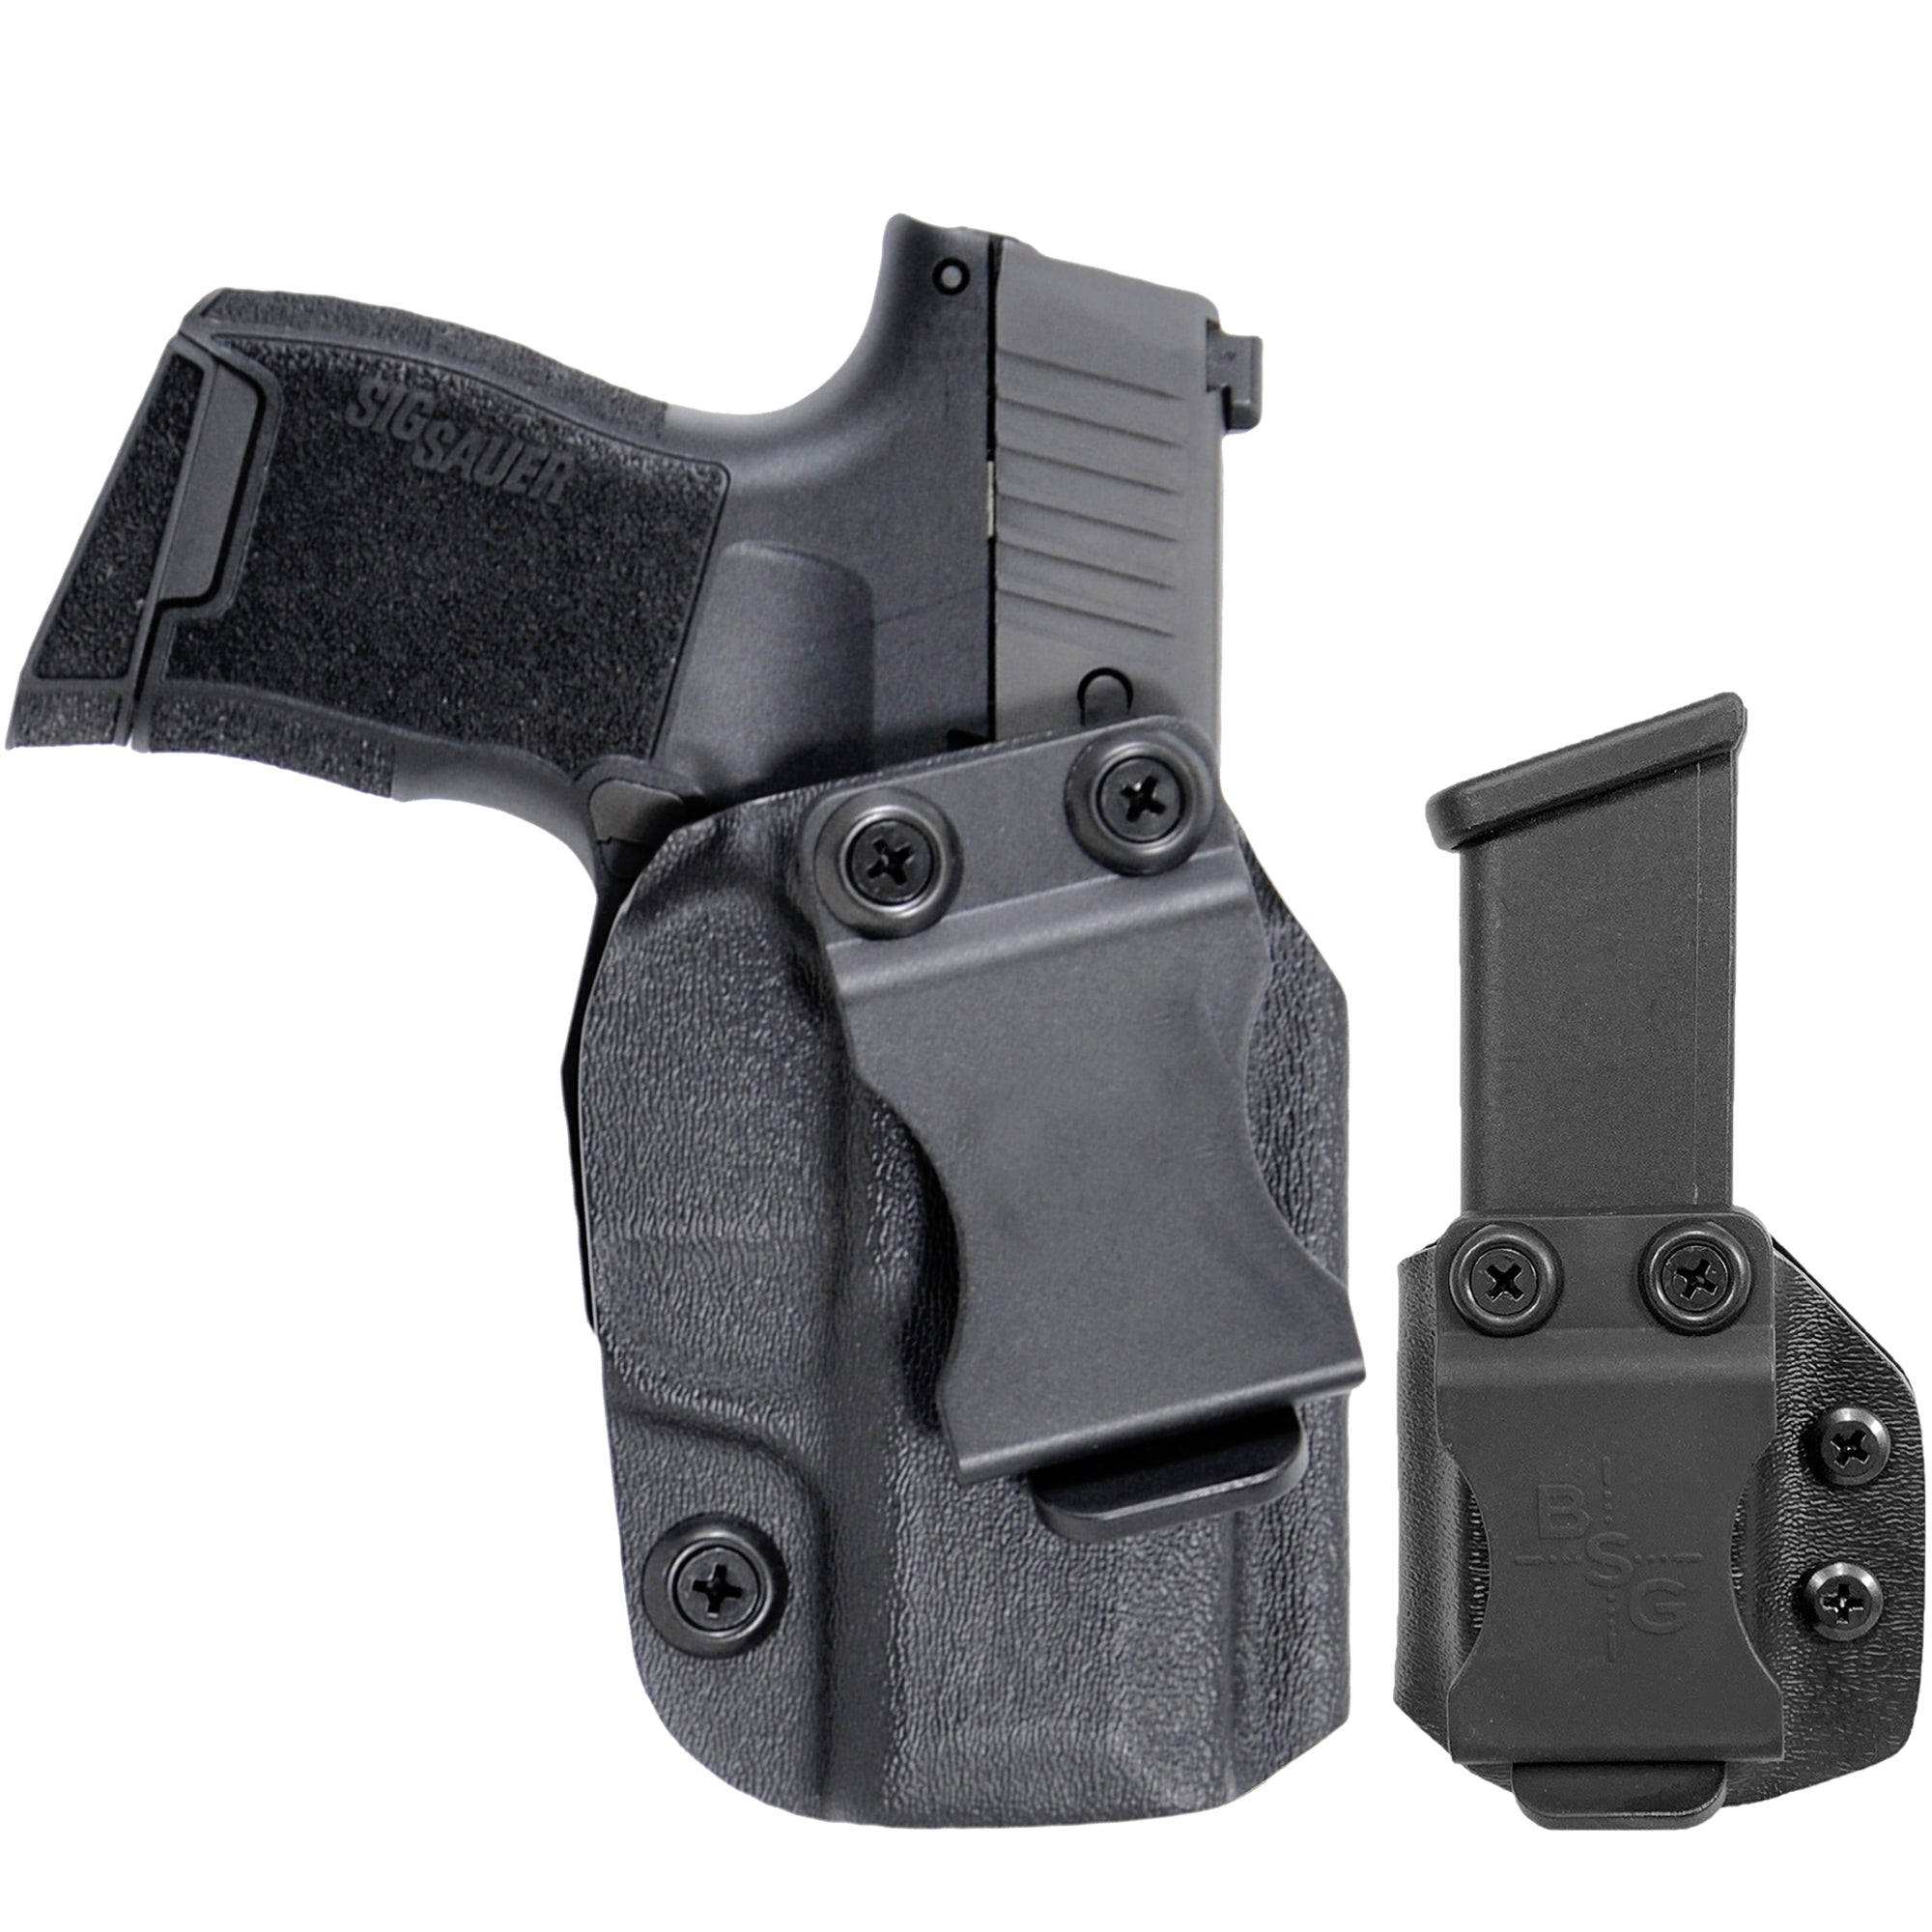  G17 Holster, Kydex IWB Holster for Glock 17 Gen 1 2 3 4 5 /  Glock 22 Glock 31 Gen 3 4 - Inside Waistband Concealed Carry Holster - Glock  17 22 31 Gun Accessories (Black, Right Hand) : Sports & Outdoors